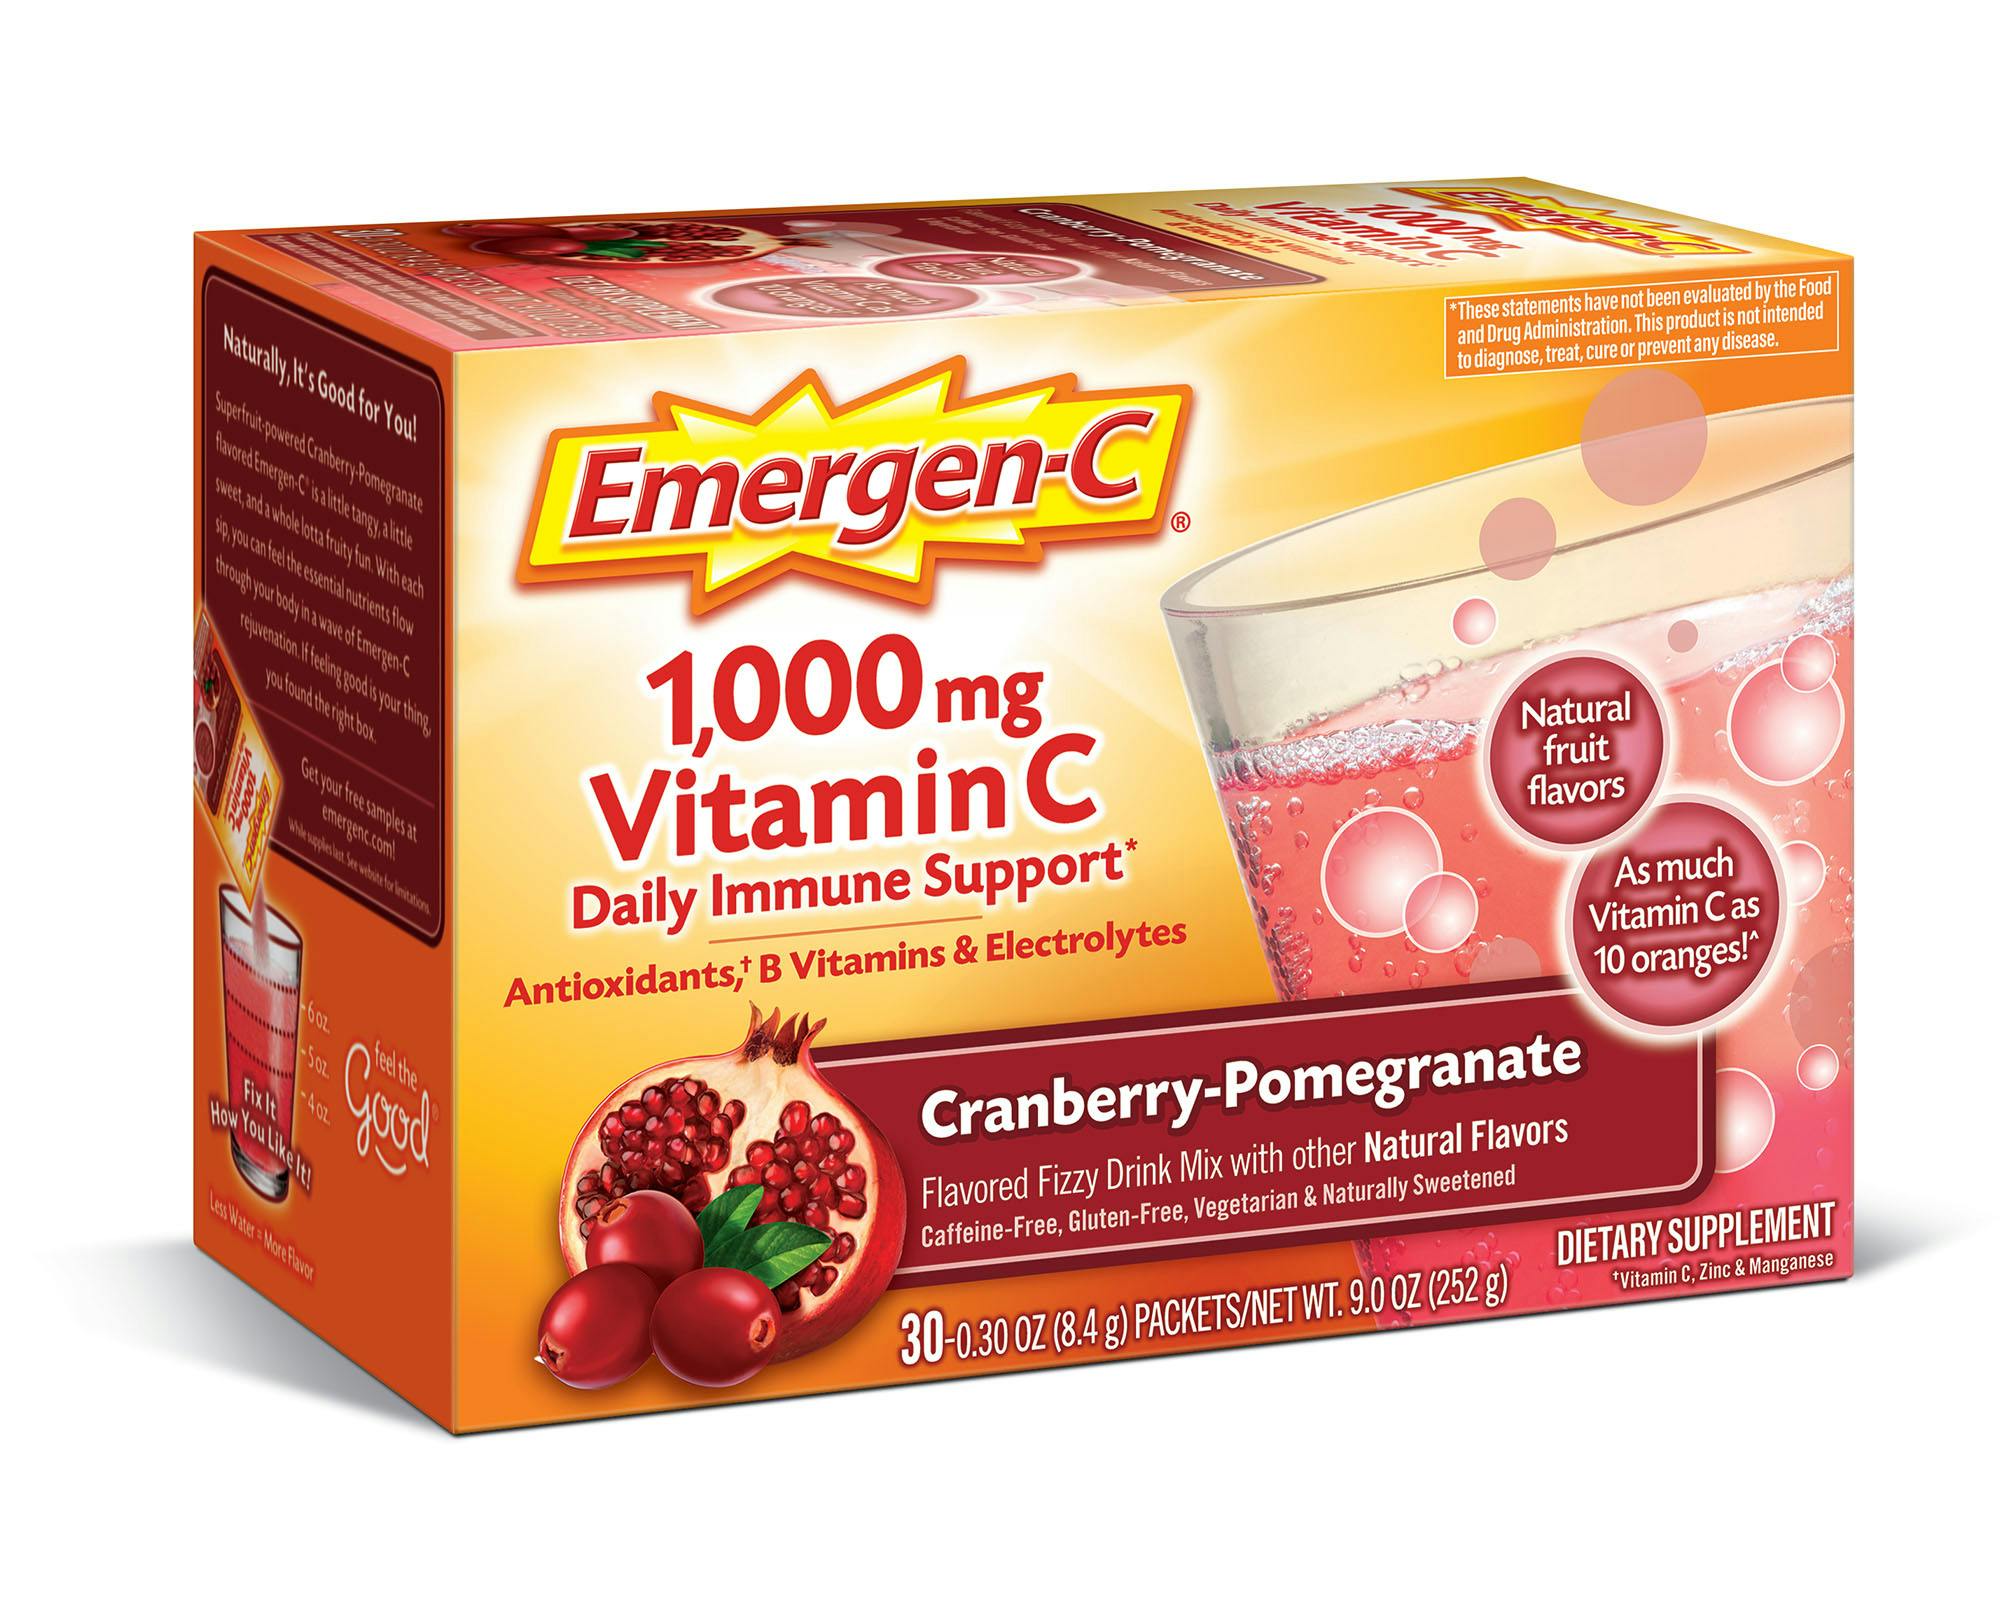 Cranberry-Pomegranate Original Immune Support box angled view